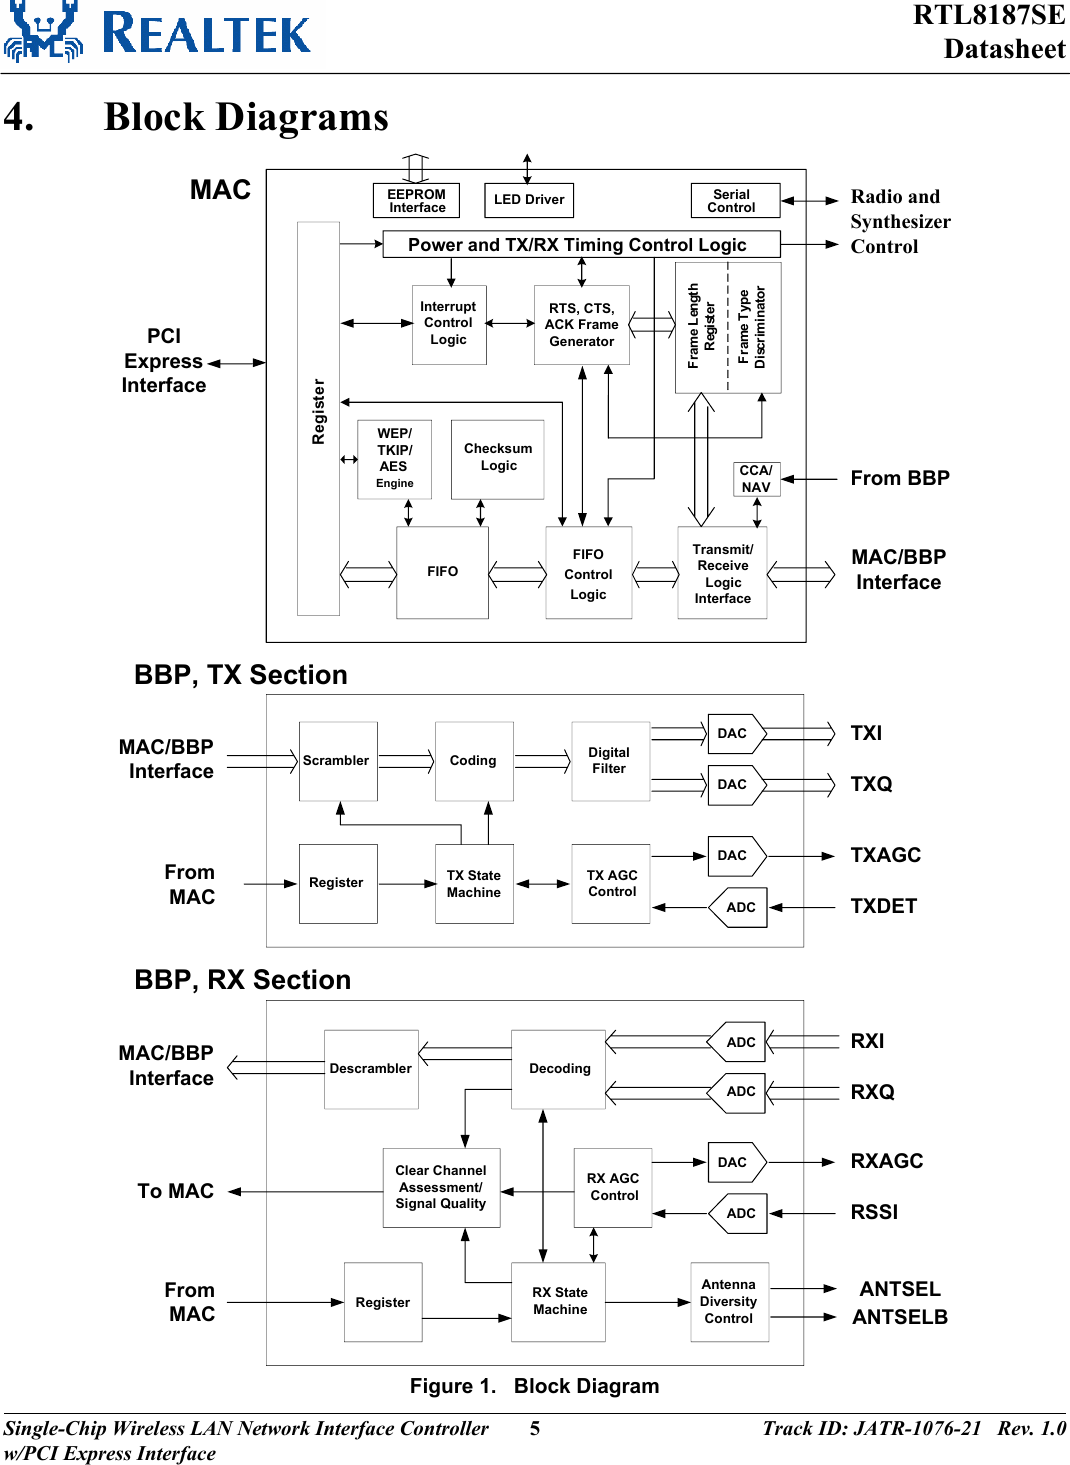 RTL8187SEDatasheetSingle-Chip Wireless LAN Network Interface Controller w/PCI Express Interface 5Track ID: JATR-1076-21   Rev. 1.04. Block Diagrams MAC/BBPInterfaceInterruptControlLogicFIFOTransmit/ReceiveLogicInterfaceRTS, CTS,ACK FrameGeneratorFIFOControlLogicFrame TypeDiscriminatorPower and TX/RX Timing Control LogicRegisterFrame LengthRegisterEEPROMInterface LED DriverScramblerTXIMACBBP, TX SectionCCA/NAV From BBPWEP/TKIP/AESEngineChecksumLogicSerialControl Radio andSynthesizerControlCoding DigitalFilter TXQTXDETTXAGCTX AGCControlDescramblerRXIMAC/BBPInterface DecodingADCRXQ DACRSSIRXAGCRX AGCControlADCADCClear ChannelAssessment/Signal QualityAntennaDiversityControlTX StateMachineRegisterFromMACRX StateMachineRegisterFromMACTo MACPCIExpressInterfaceBBP, RX SectionMAC/BBPInterface  DACADC DAC DACANTSELBANTSELFigure 1.   Block Diagram 